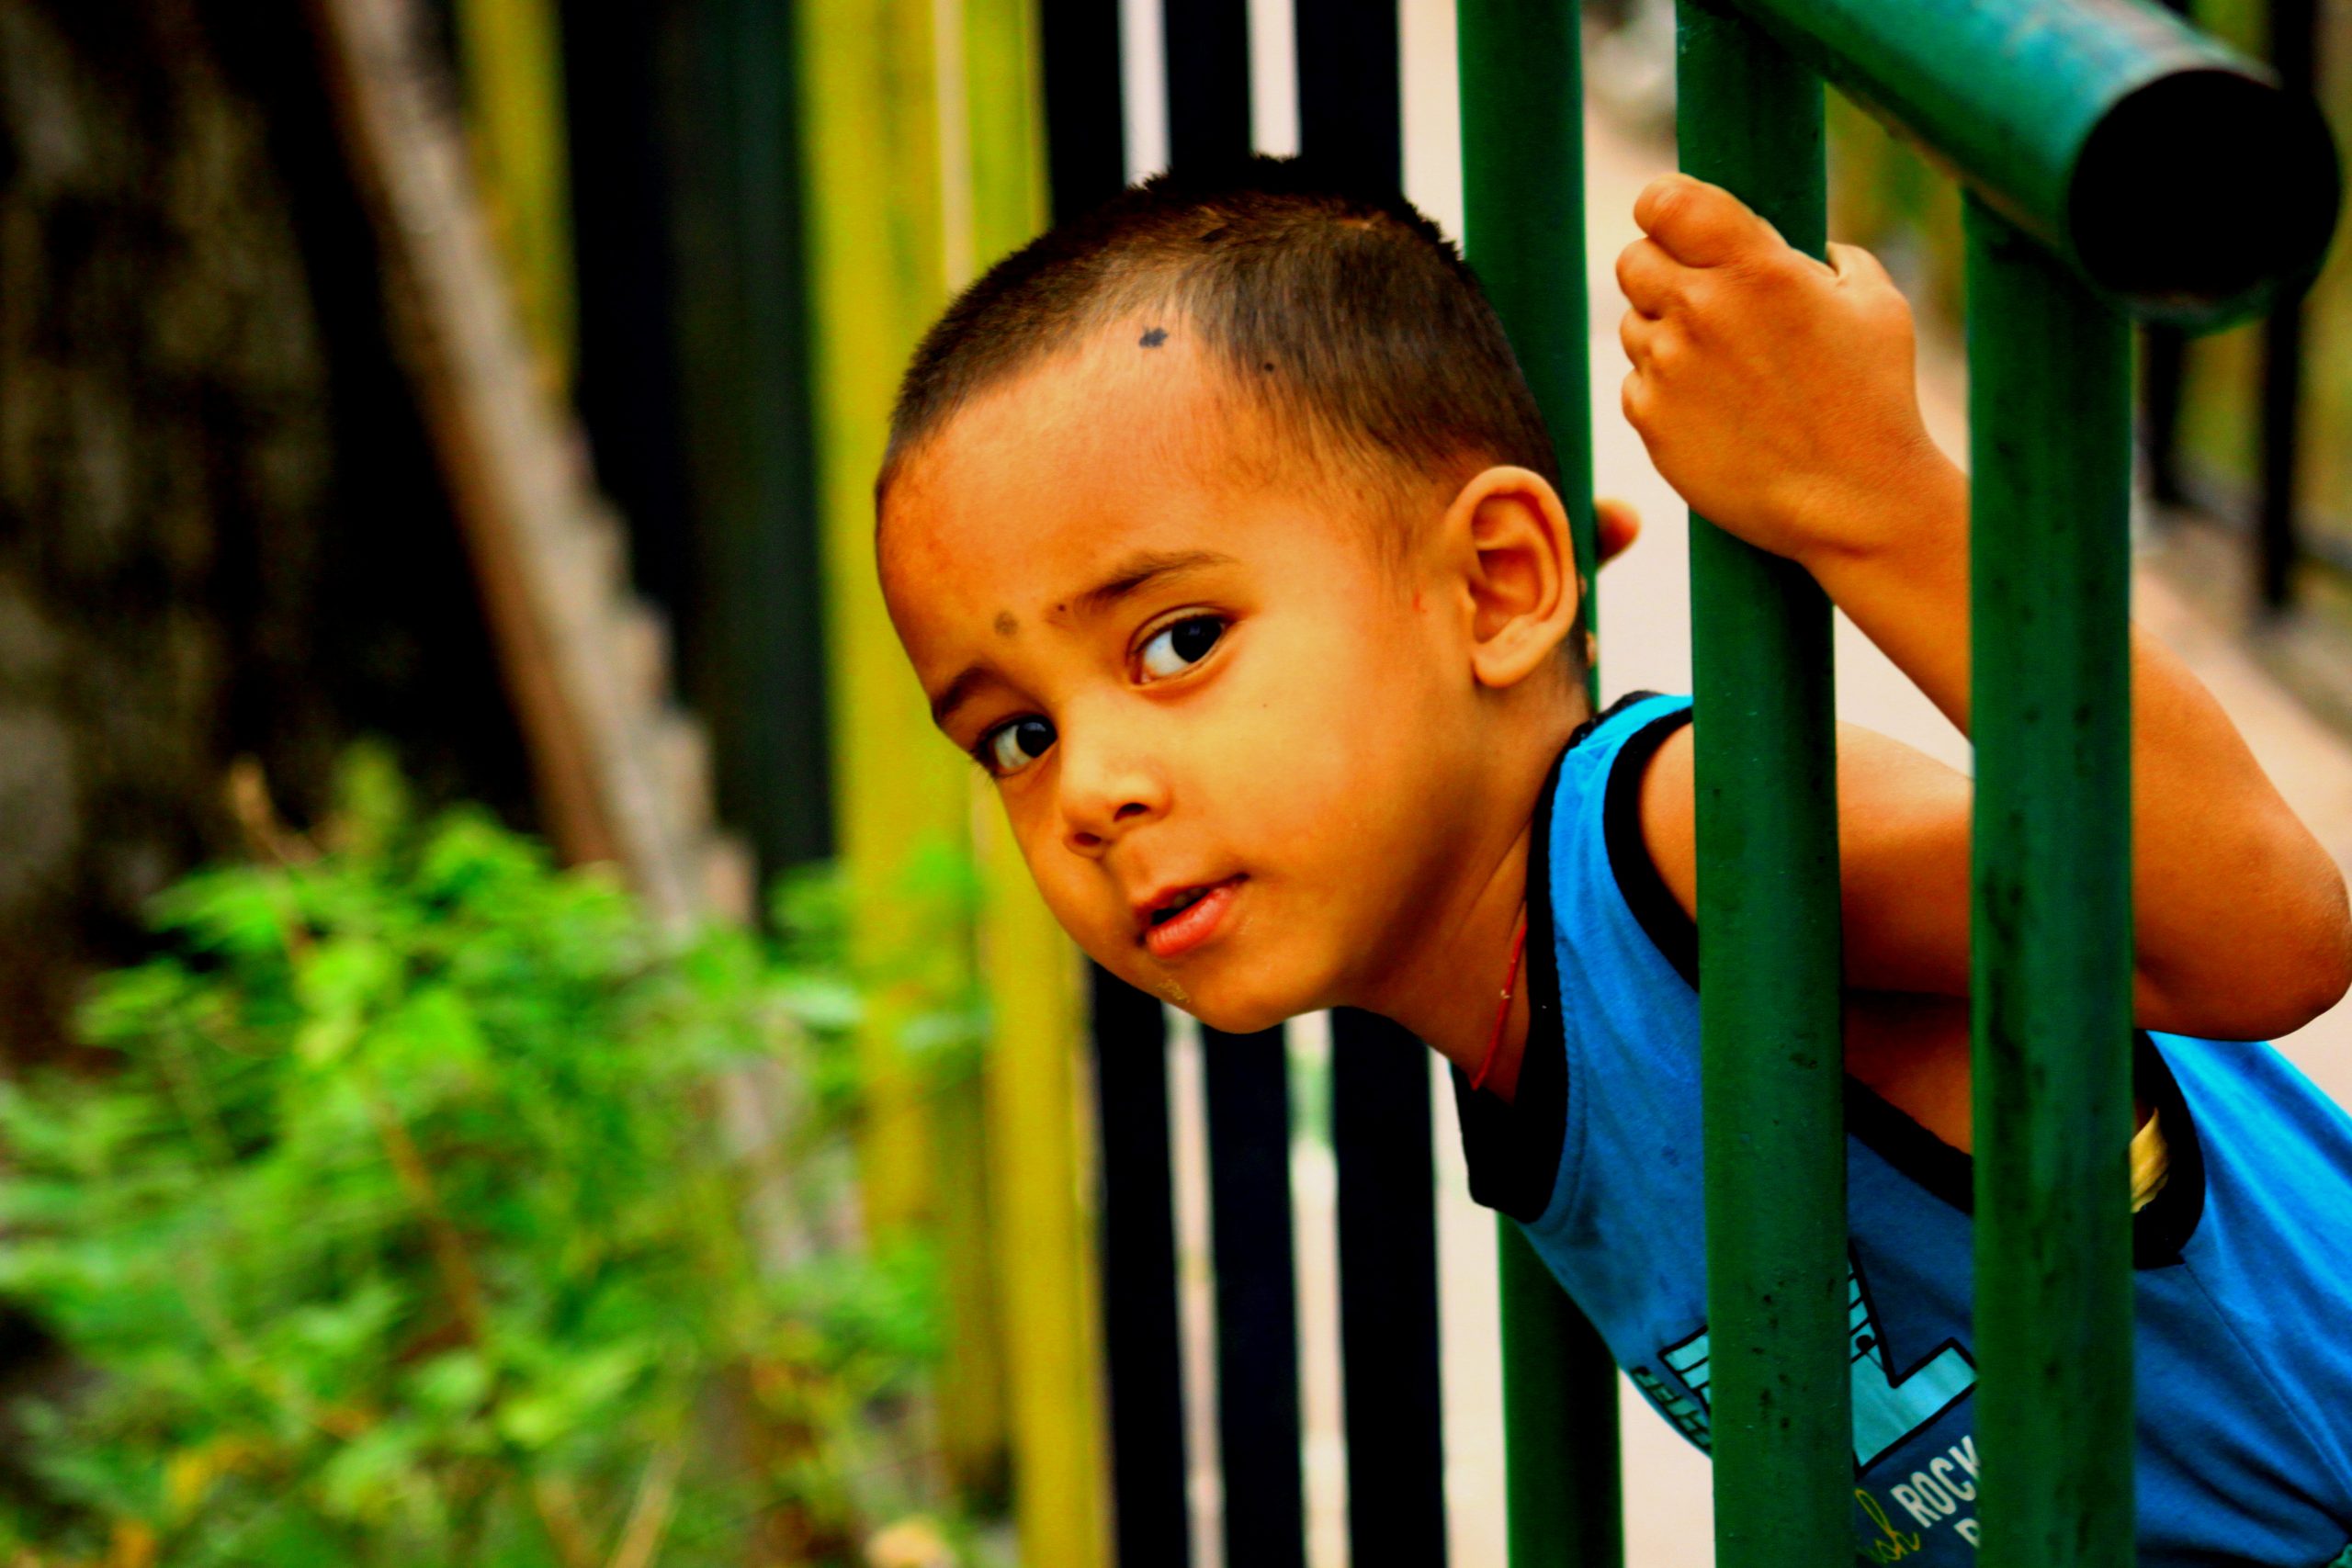 Little boy peeking through the railing